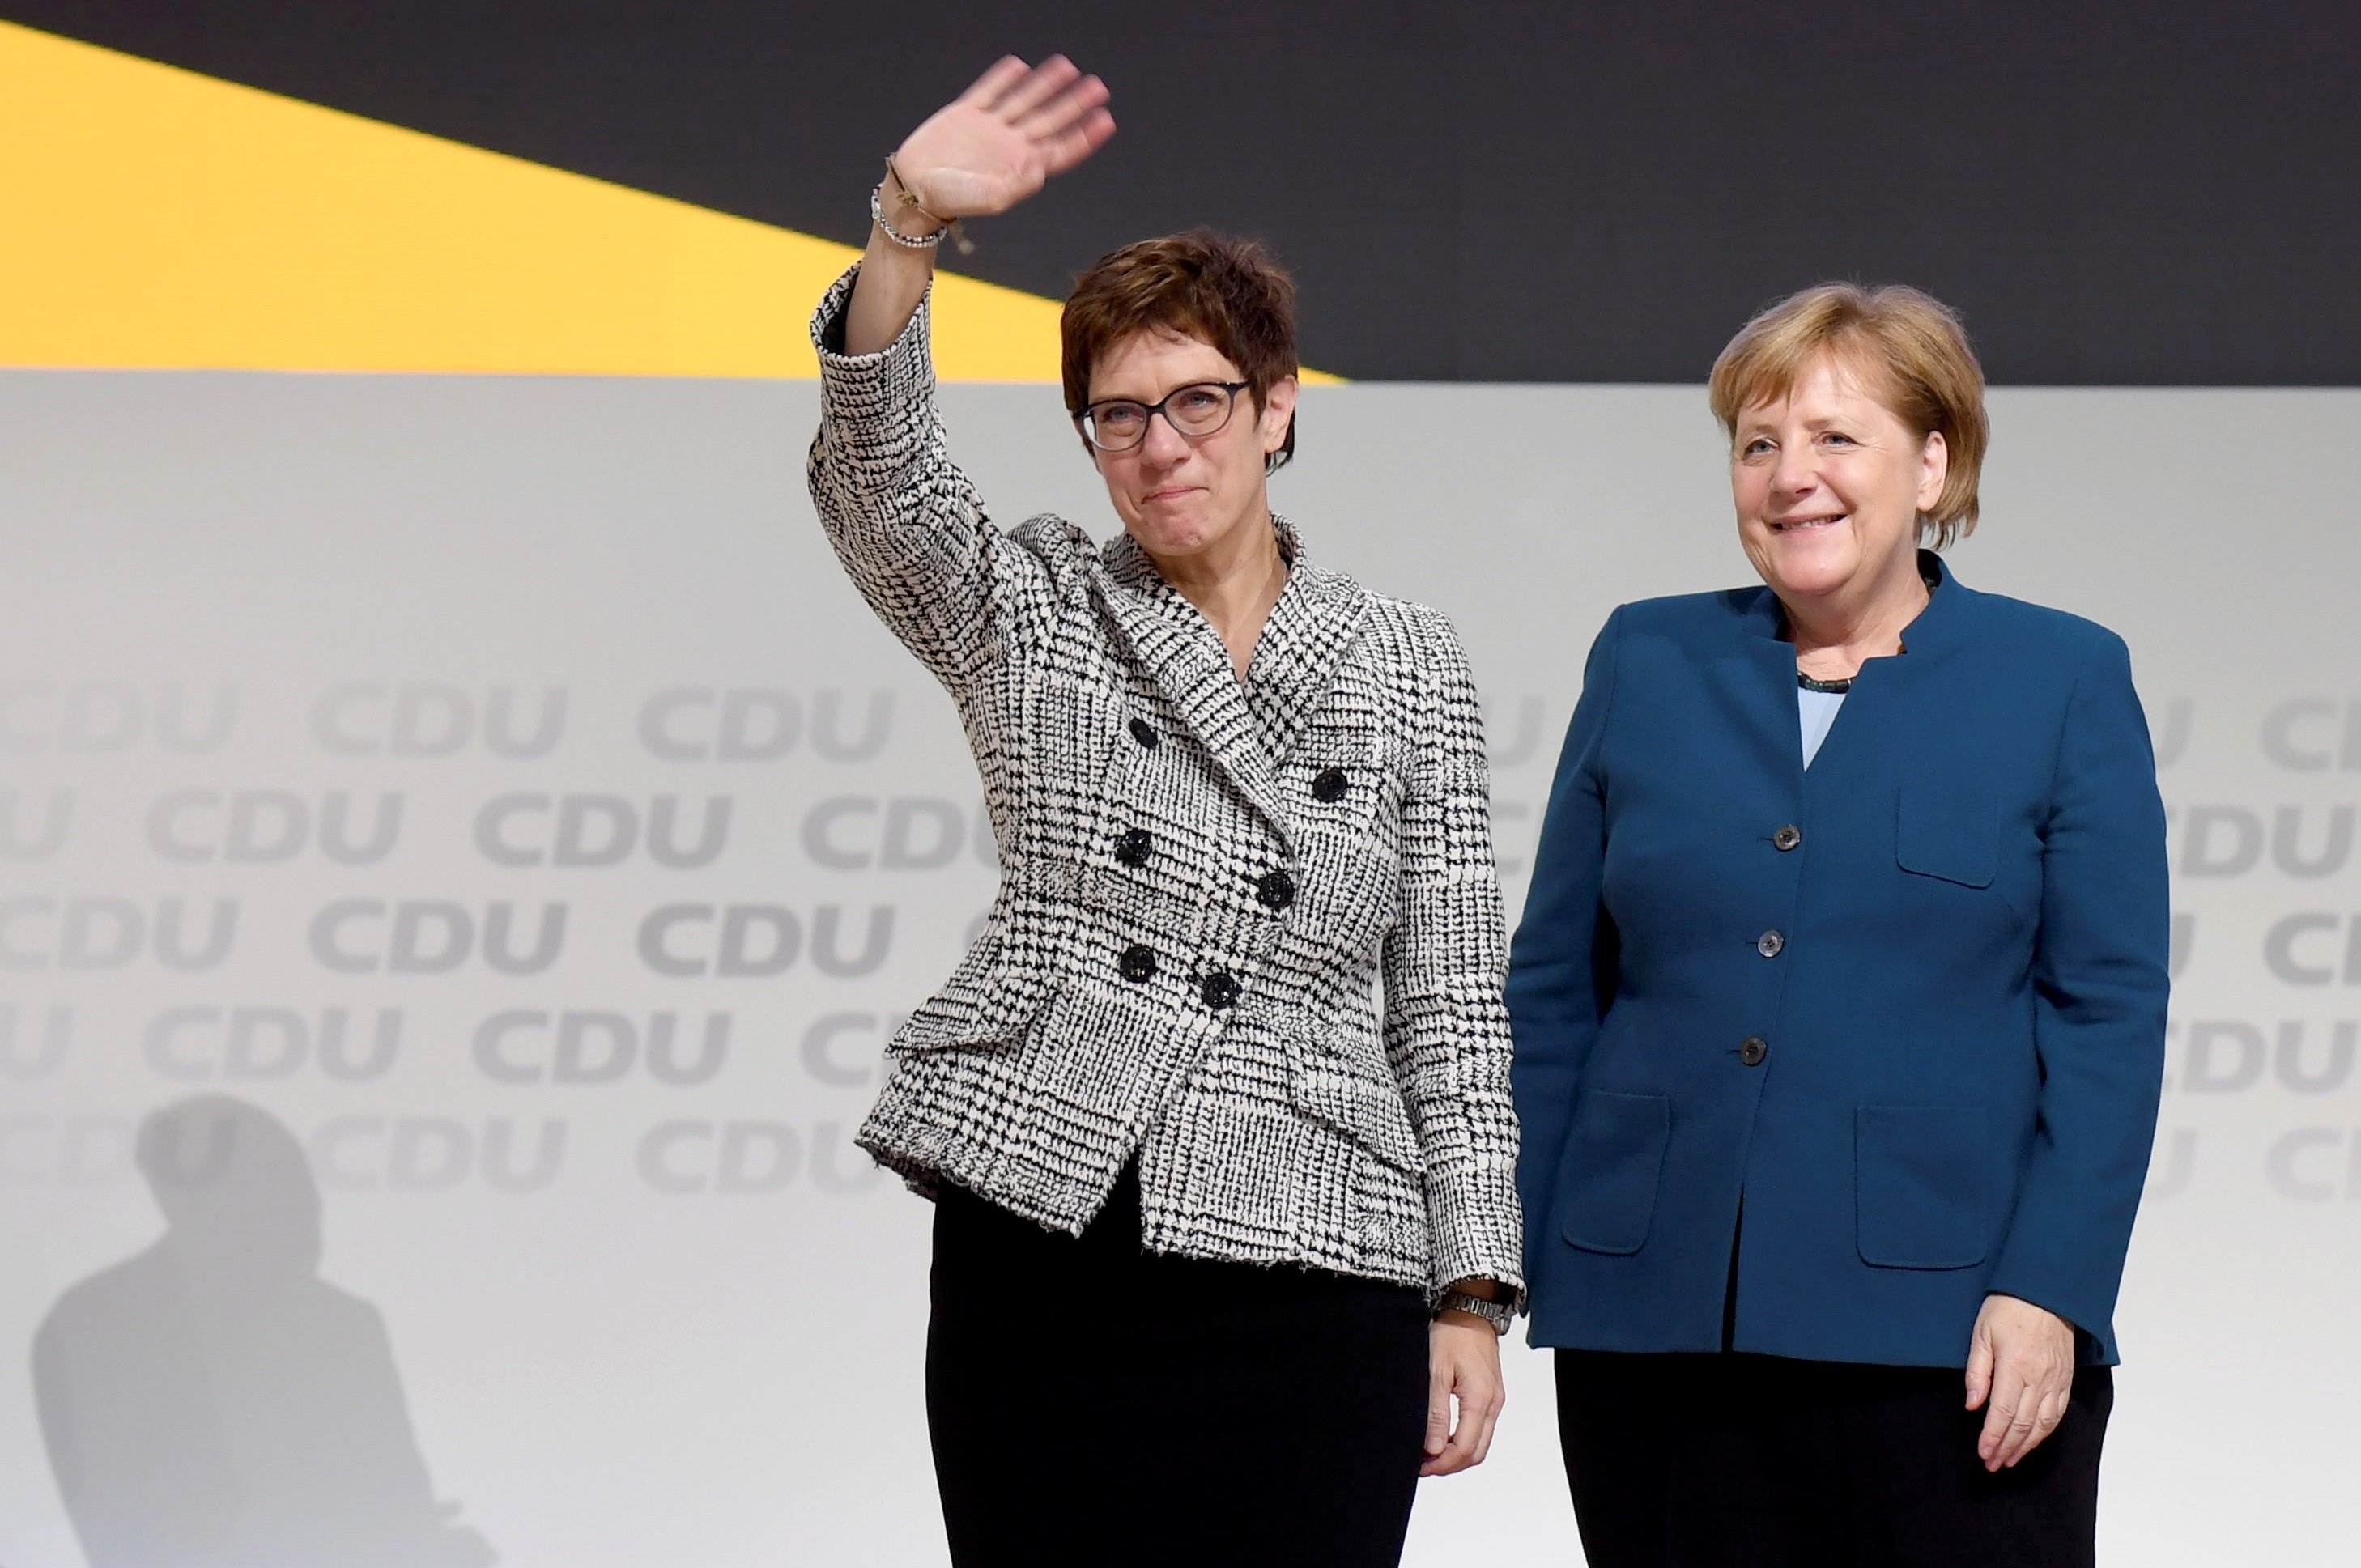 La centrista Kramp-Karrenbauer, sucesora de Merkel en la CDU